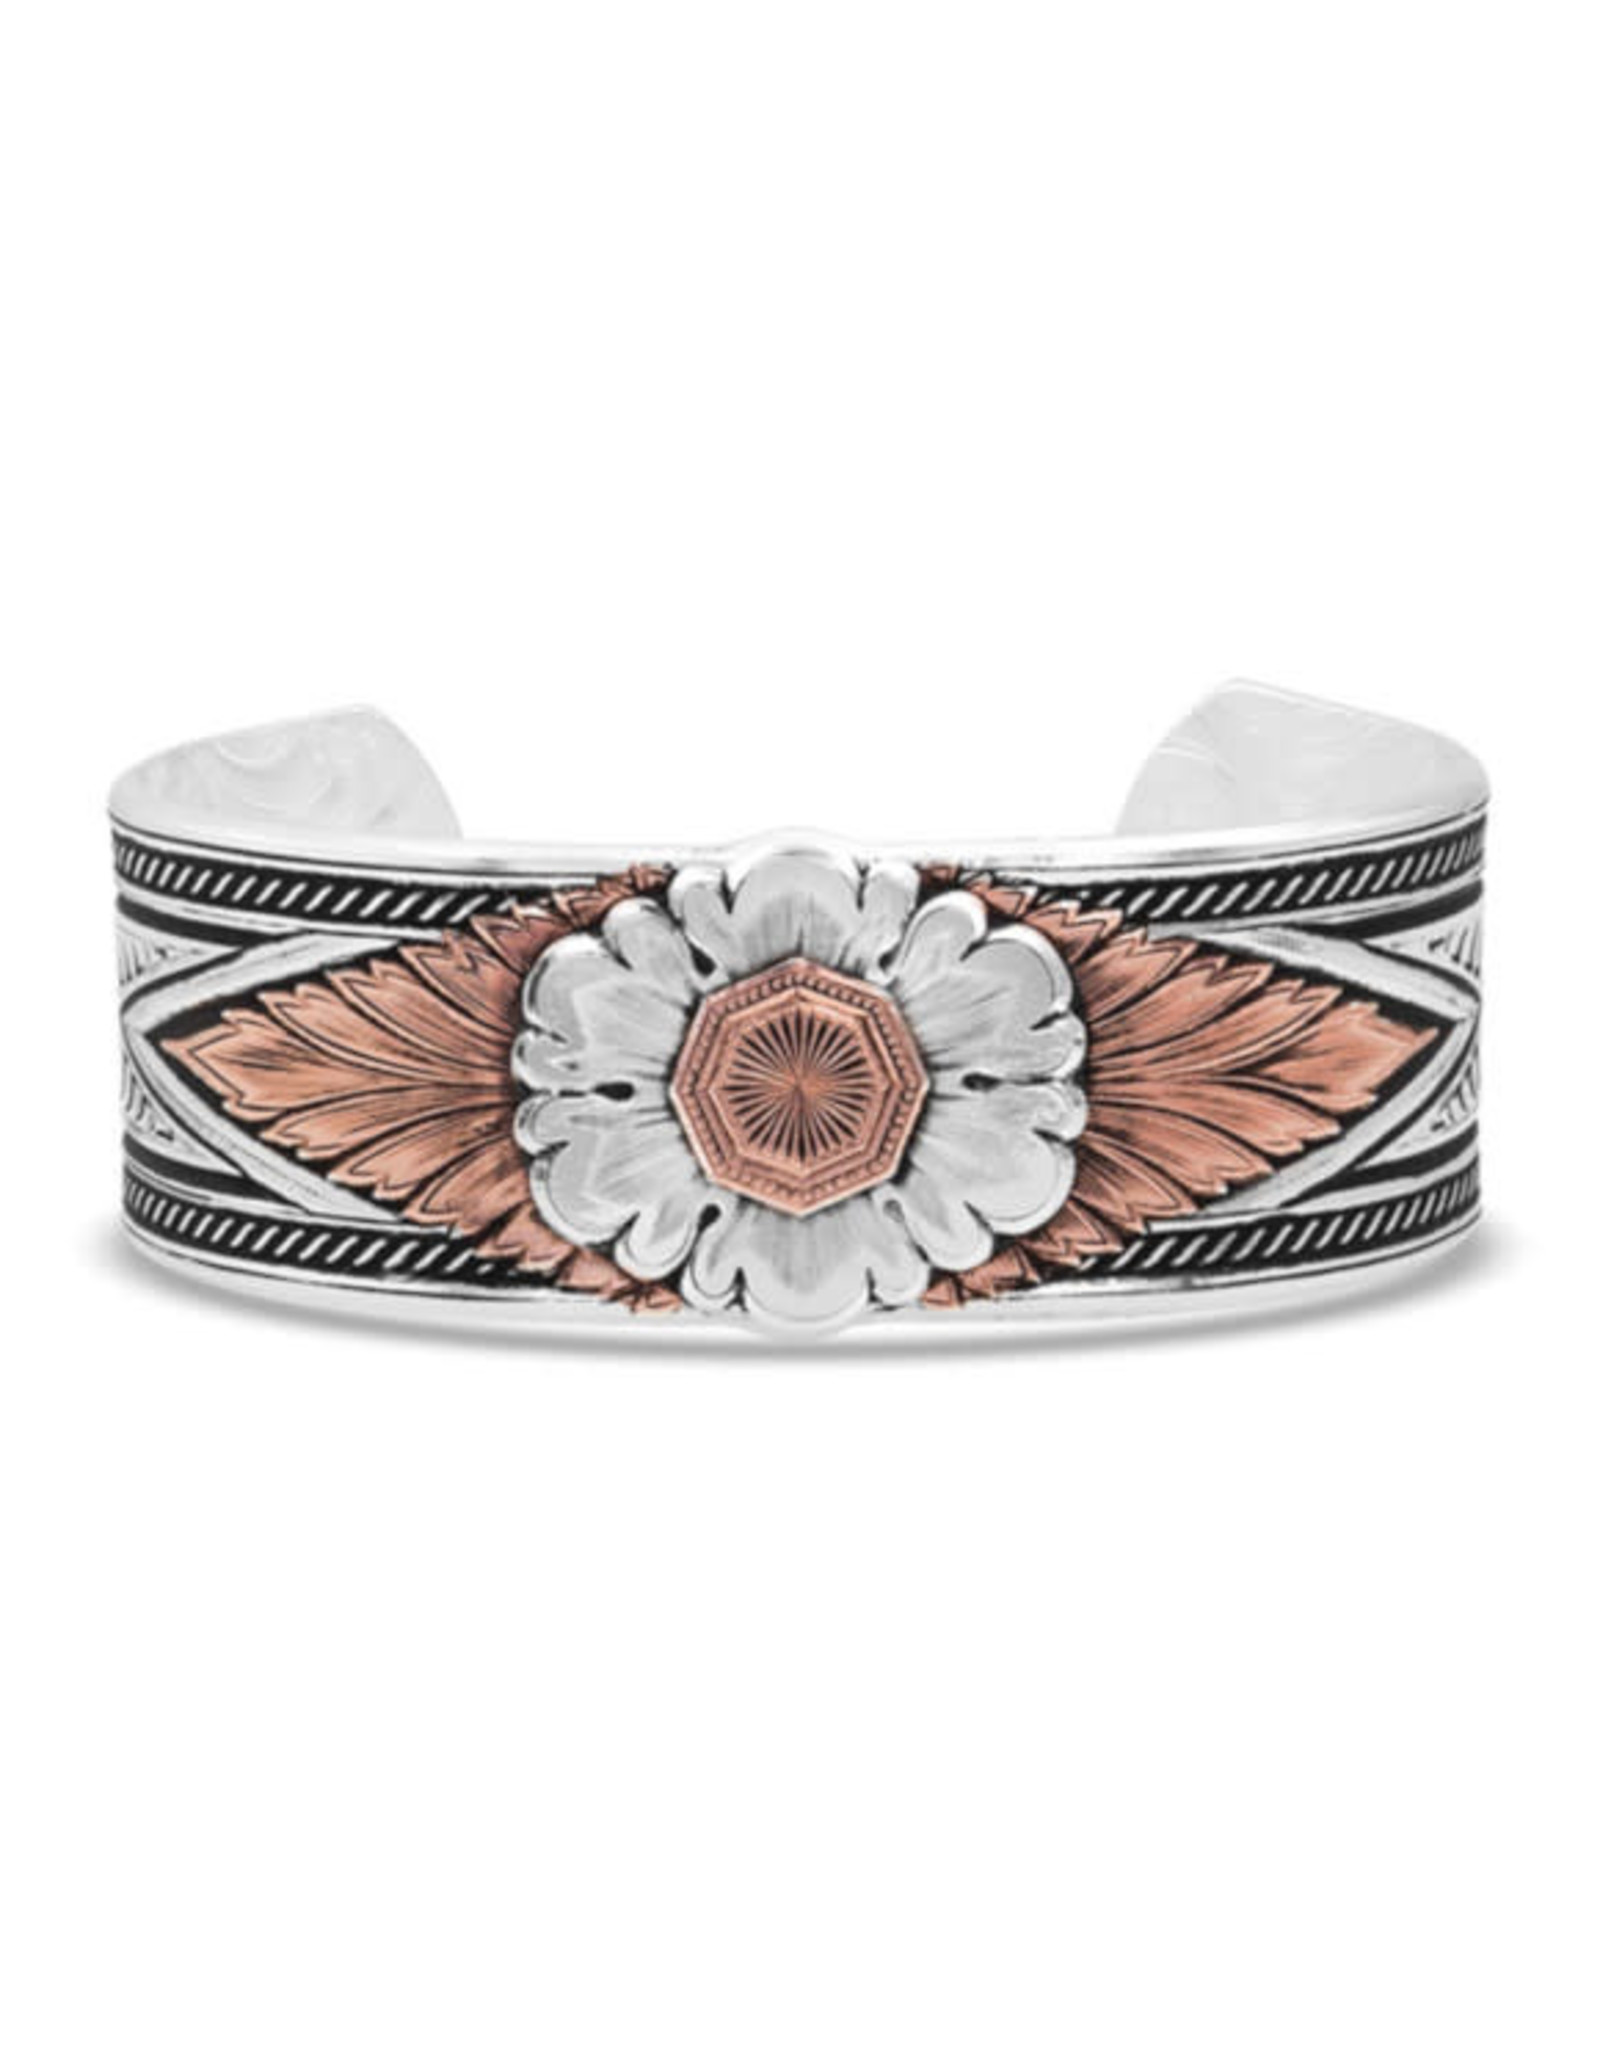 Montana Silversmiths Carved Floral BC3320RG Rose Gold Cuff Bracelet